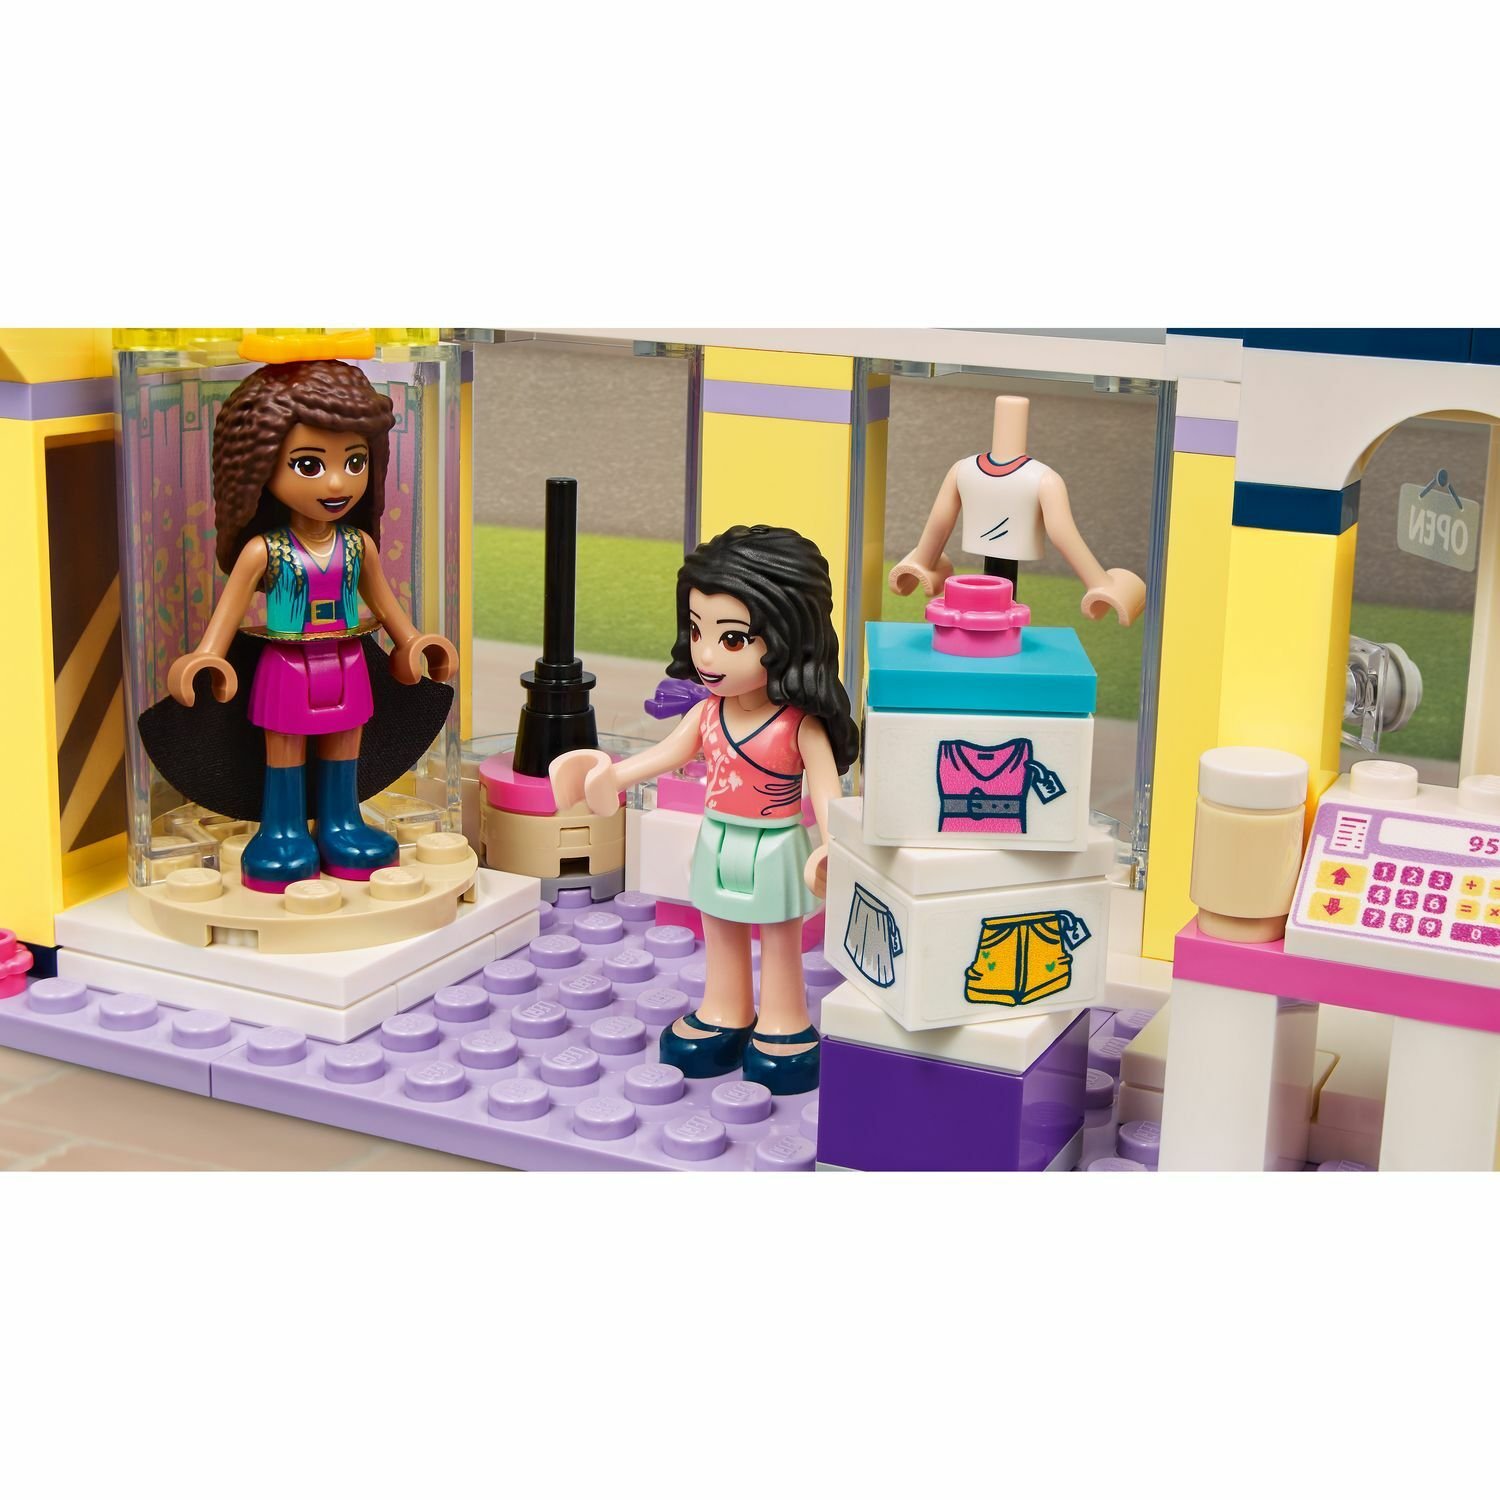 Lego Friends 41427 Модный бутик Эммы